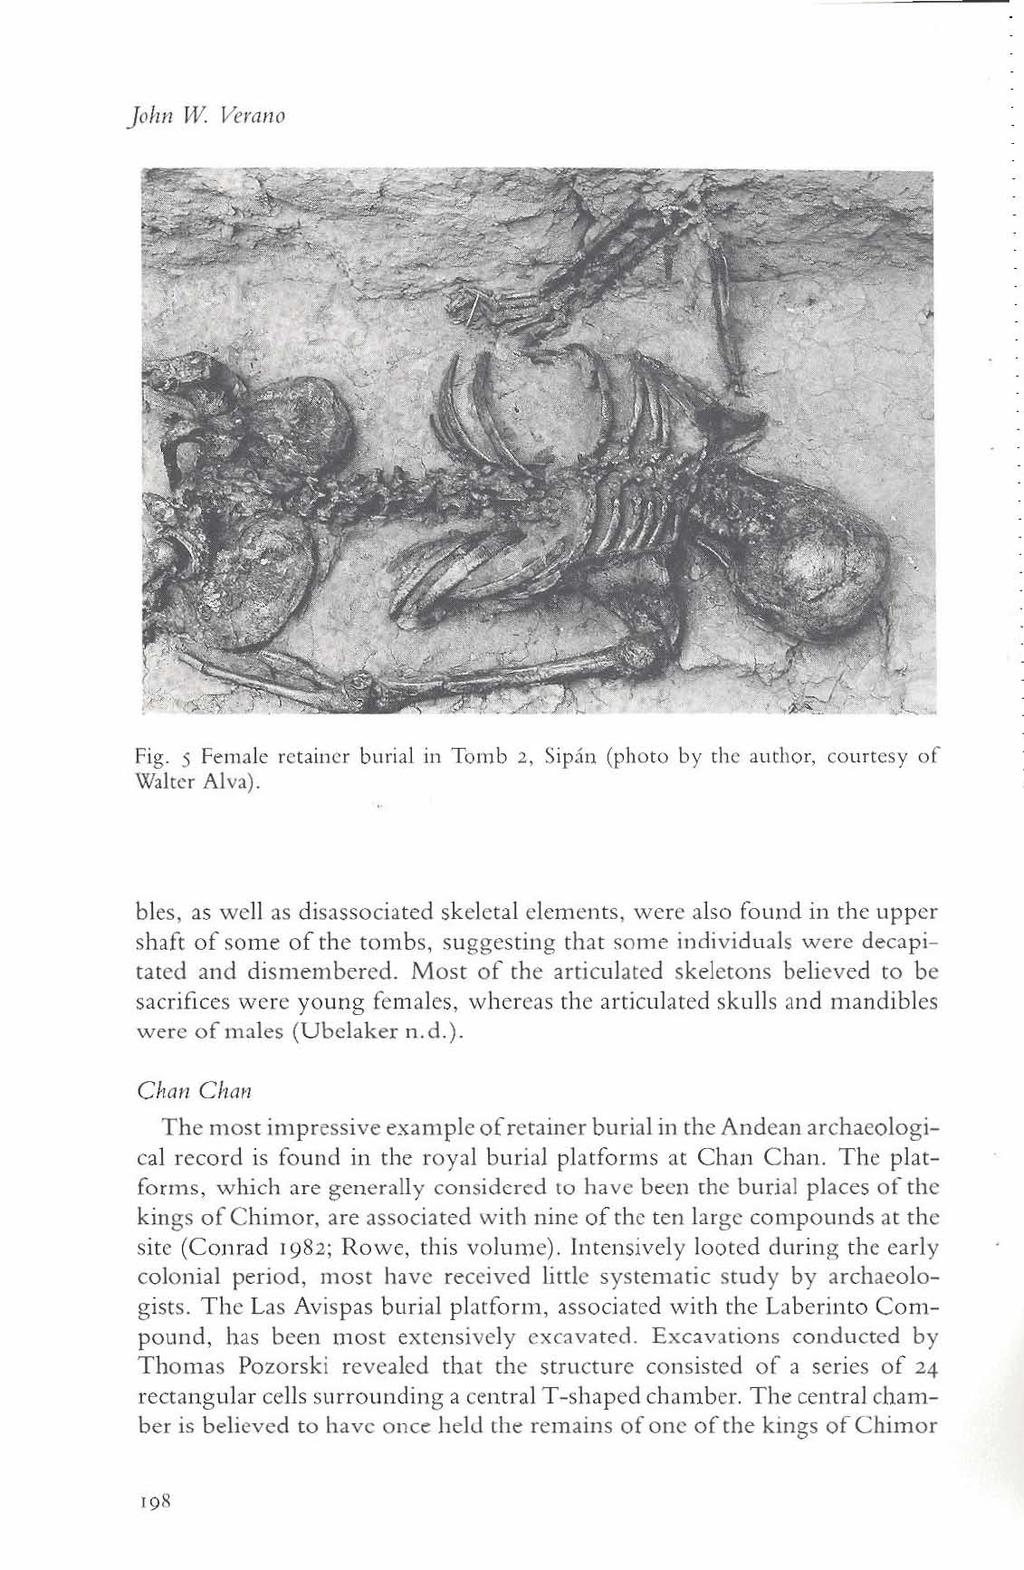 John W Verano Rg. 5 Female retainer burial in Tomb 2, Sipan poco oy me author, courtesy of Walter Alva).